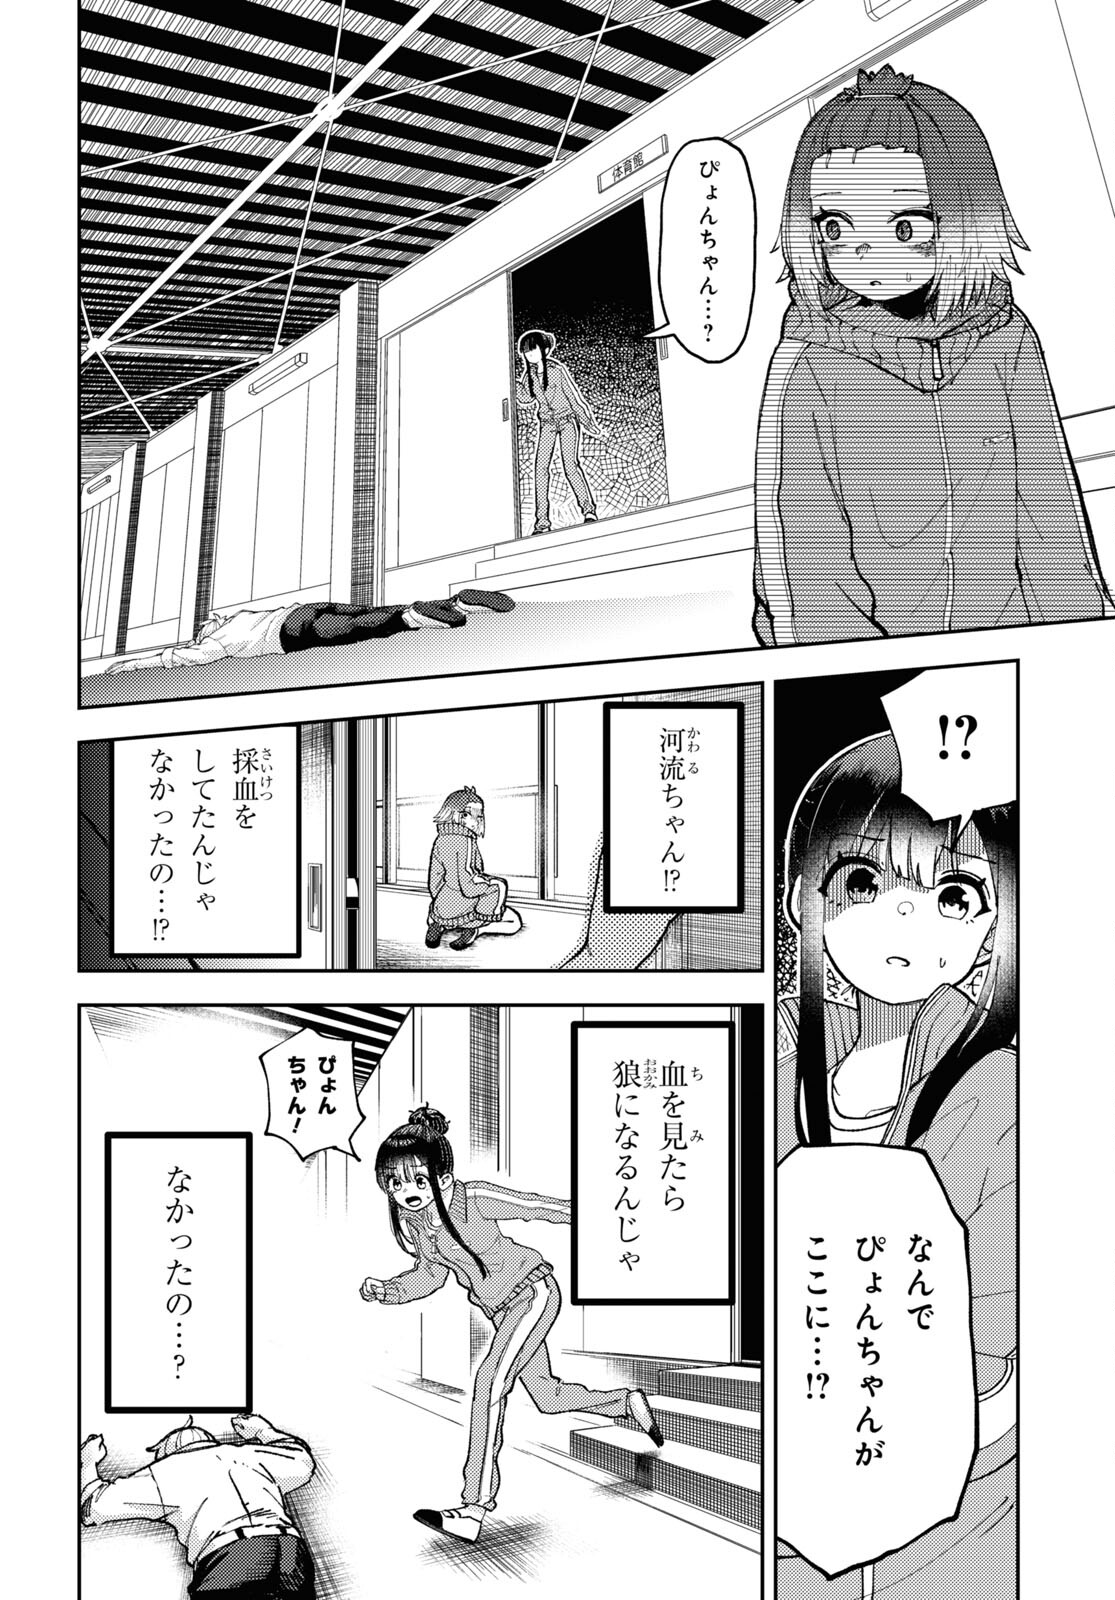 Garuru Girl - Chapter 3 - Page 32